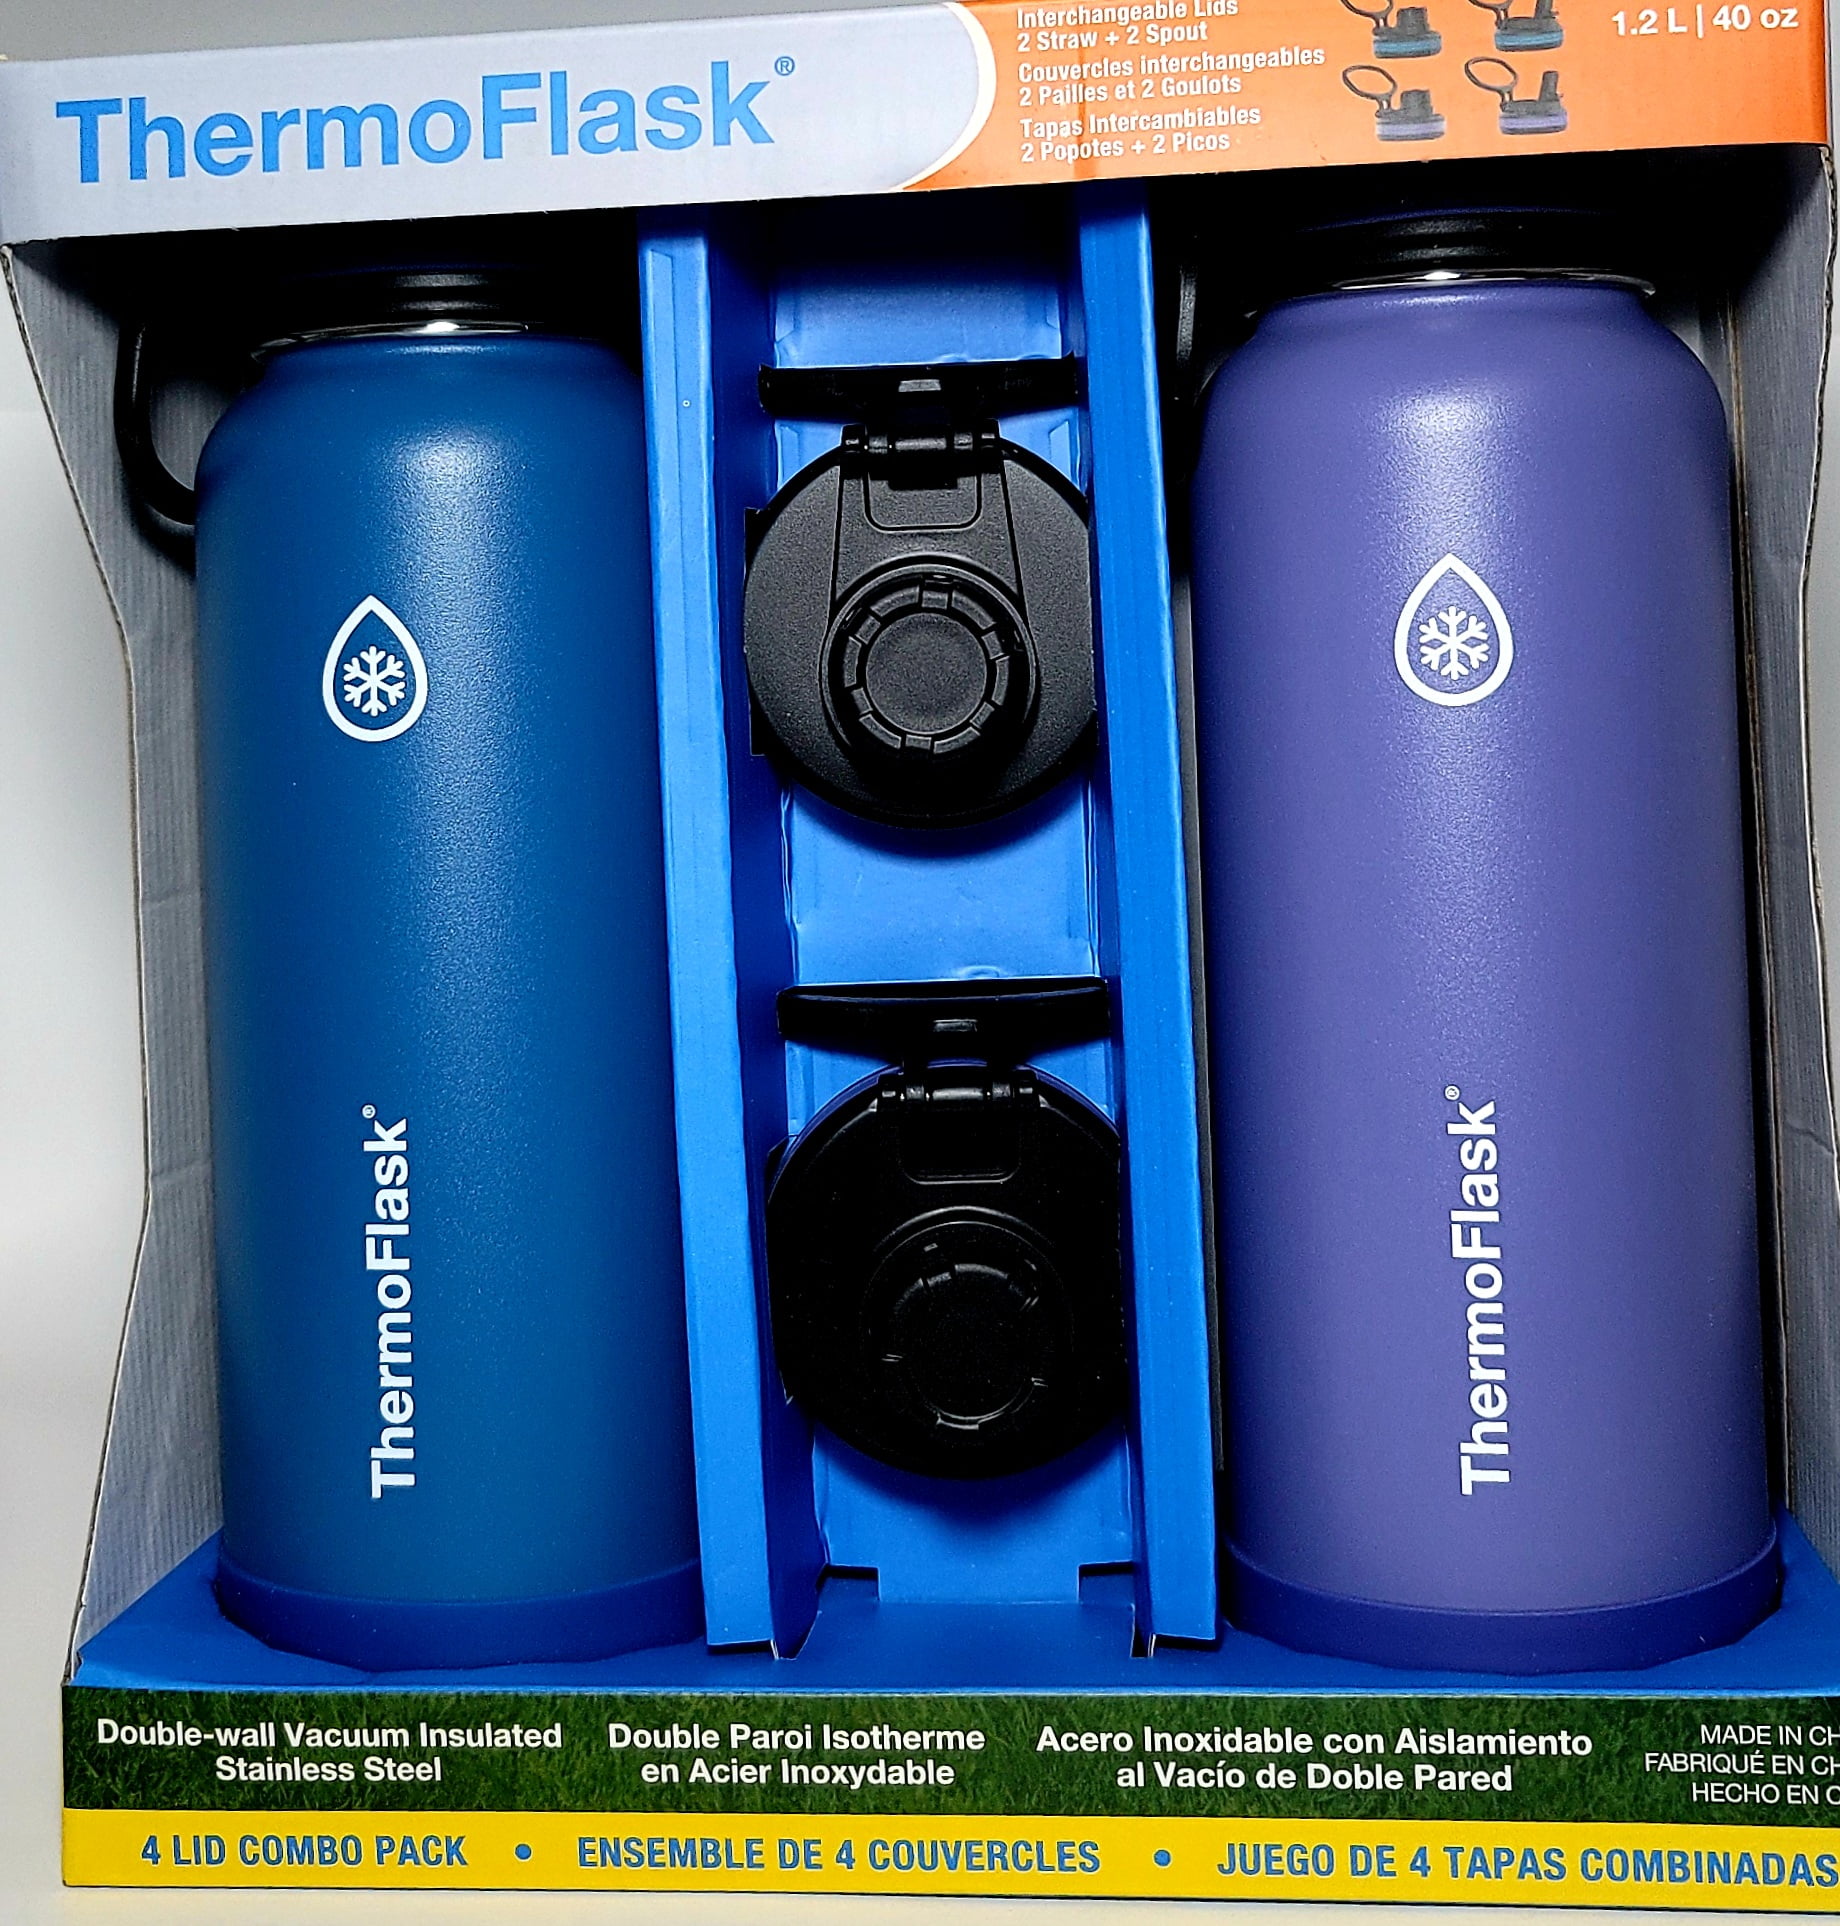 Thermoflask Set of 2pcs x 40oz